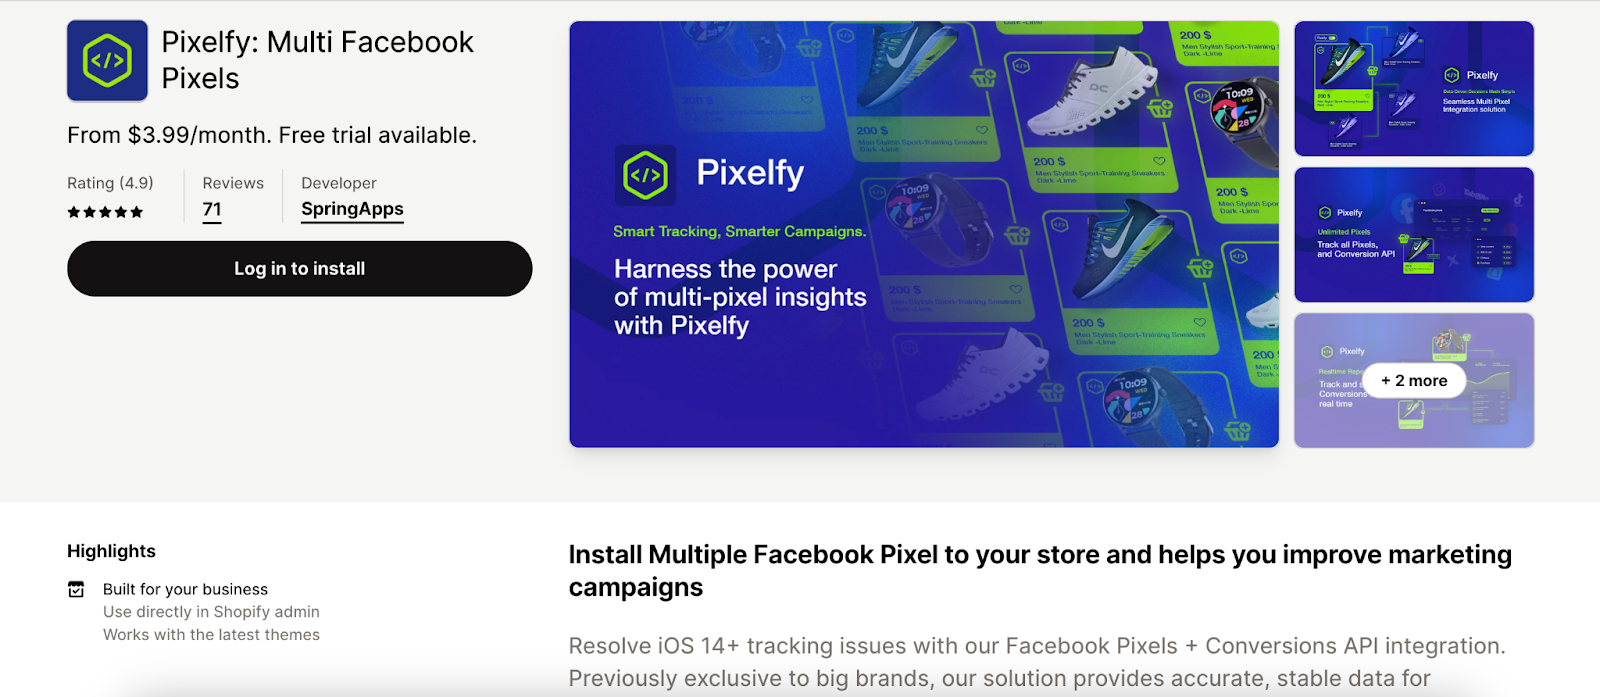 Pixelfy: Multi Facebook Pixels